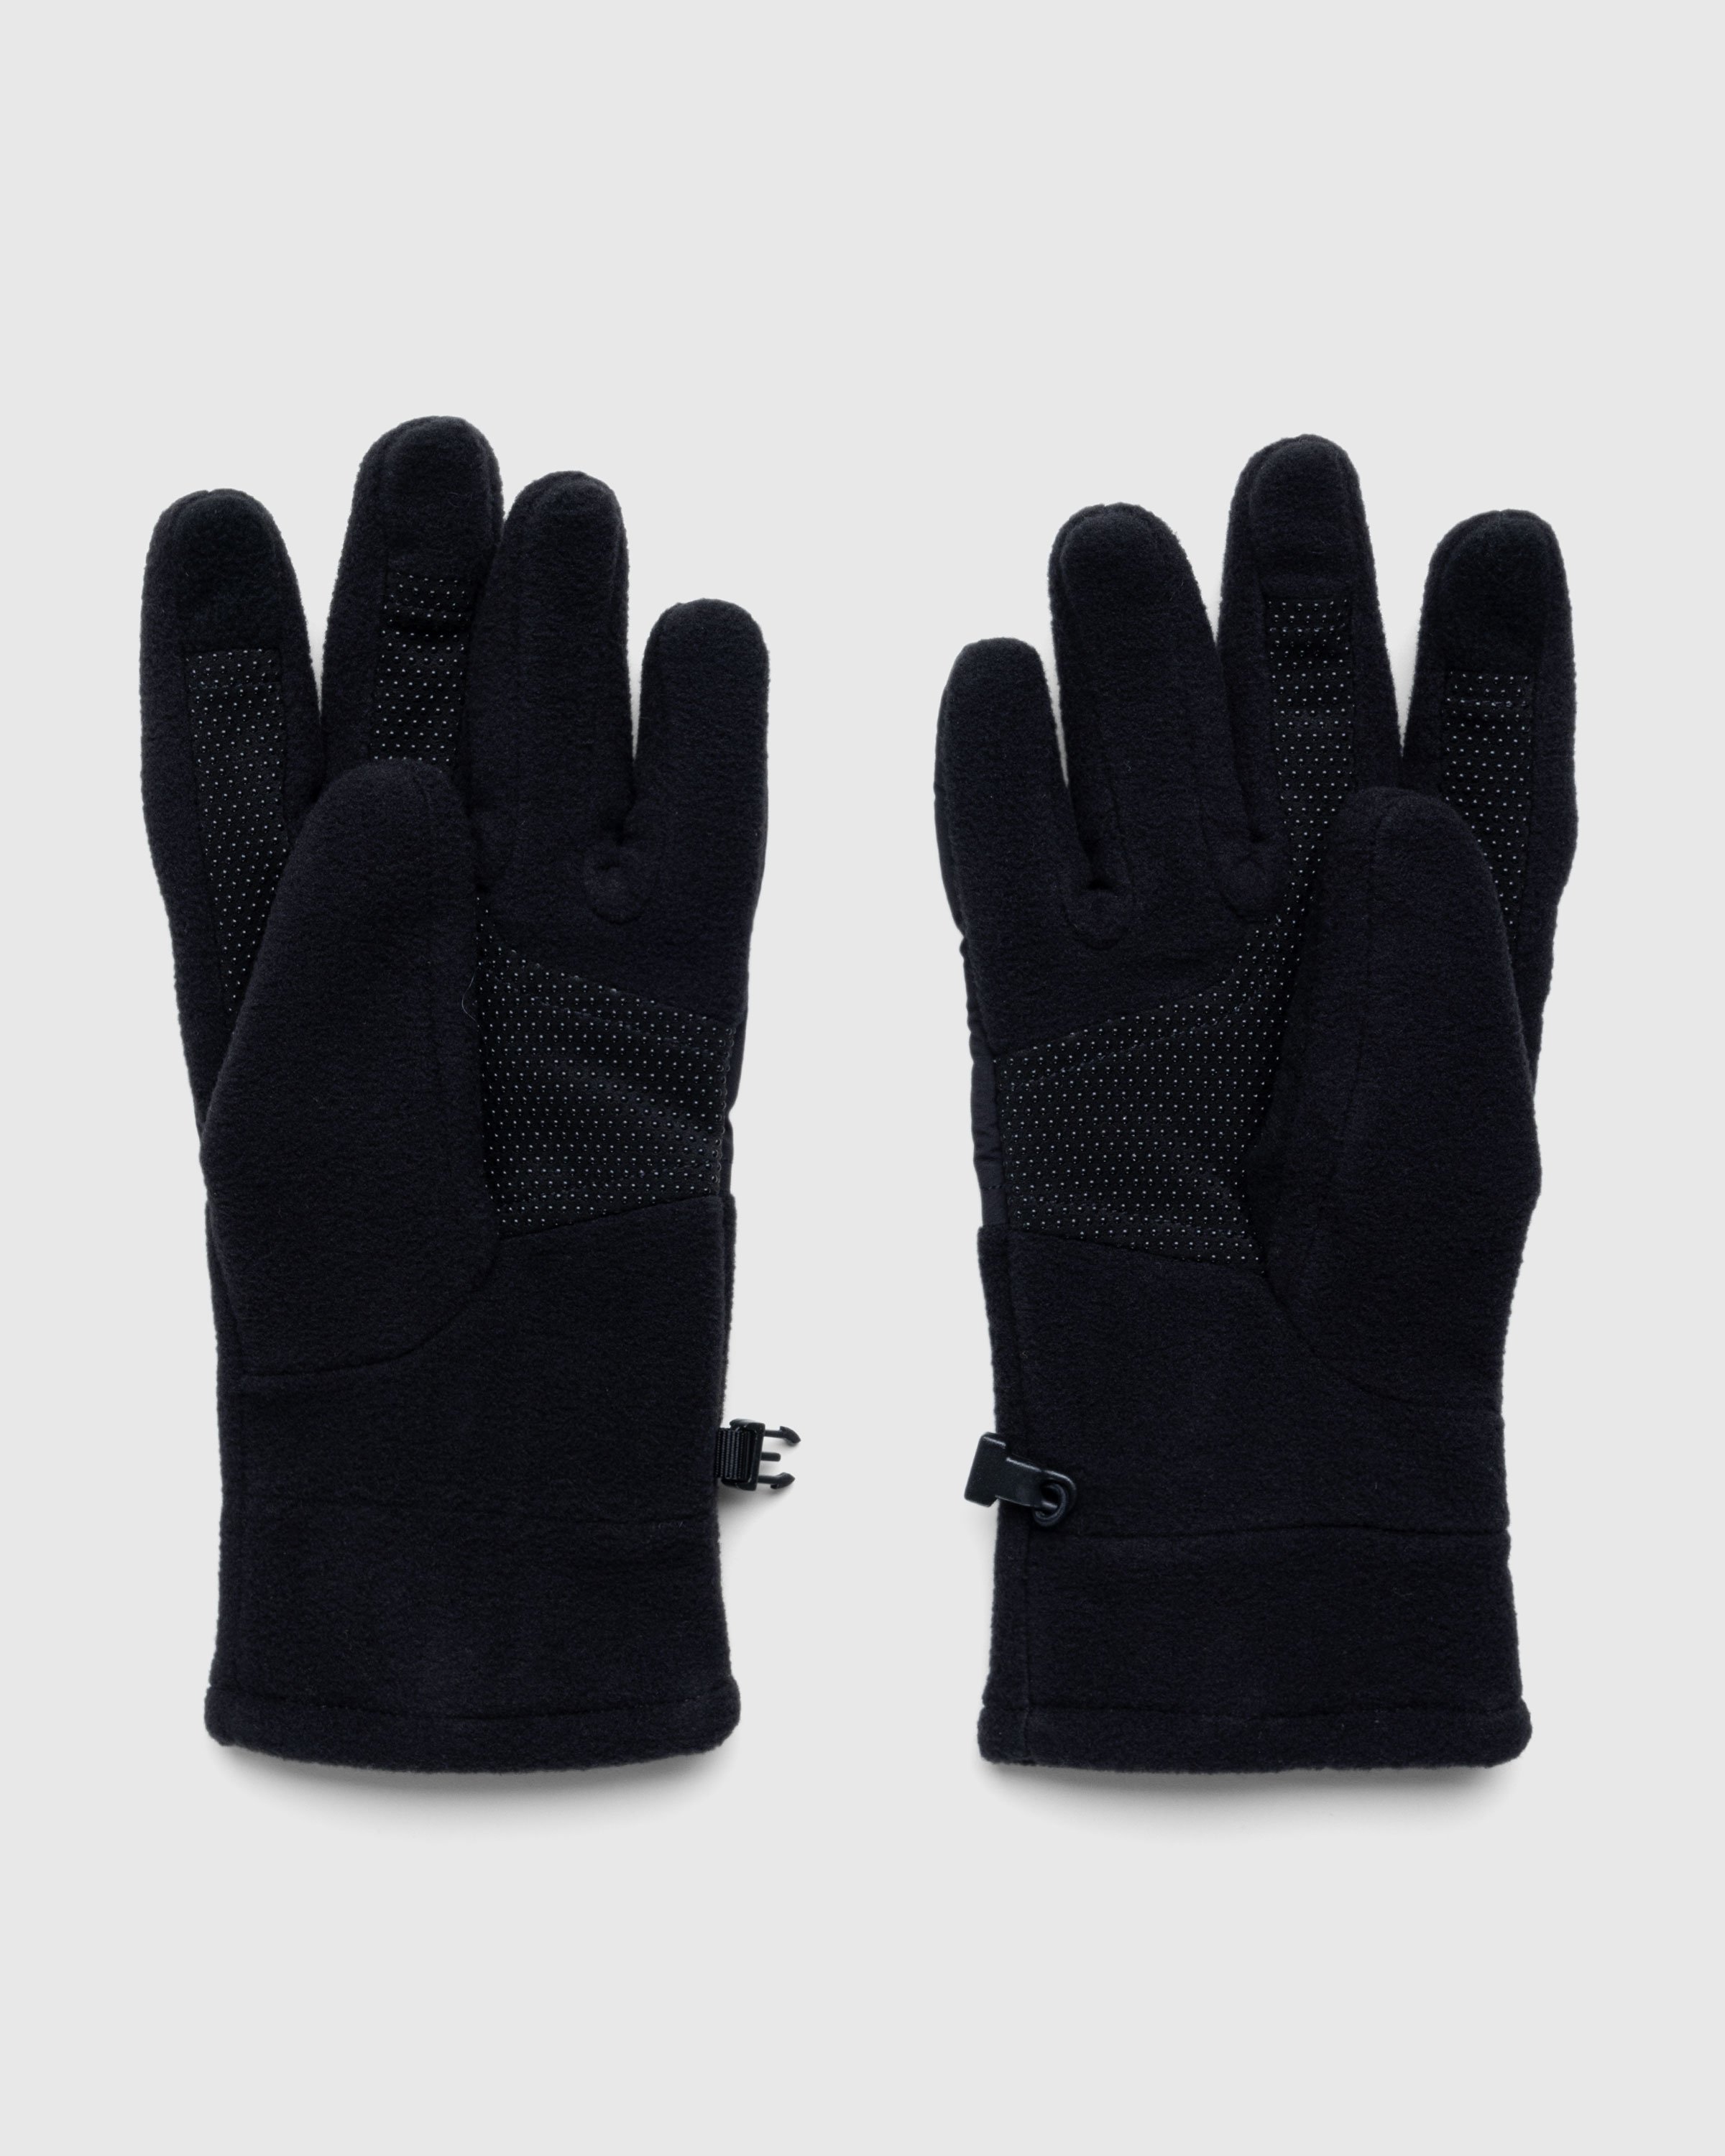 The North Face - Denali Etip Gloves TNF Black - Accessories - Black - Image 2